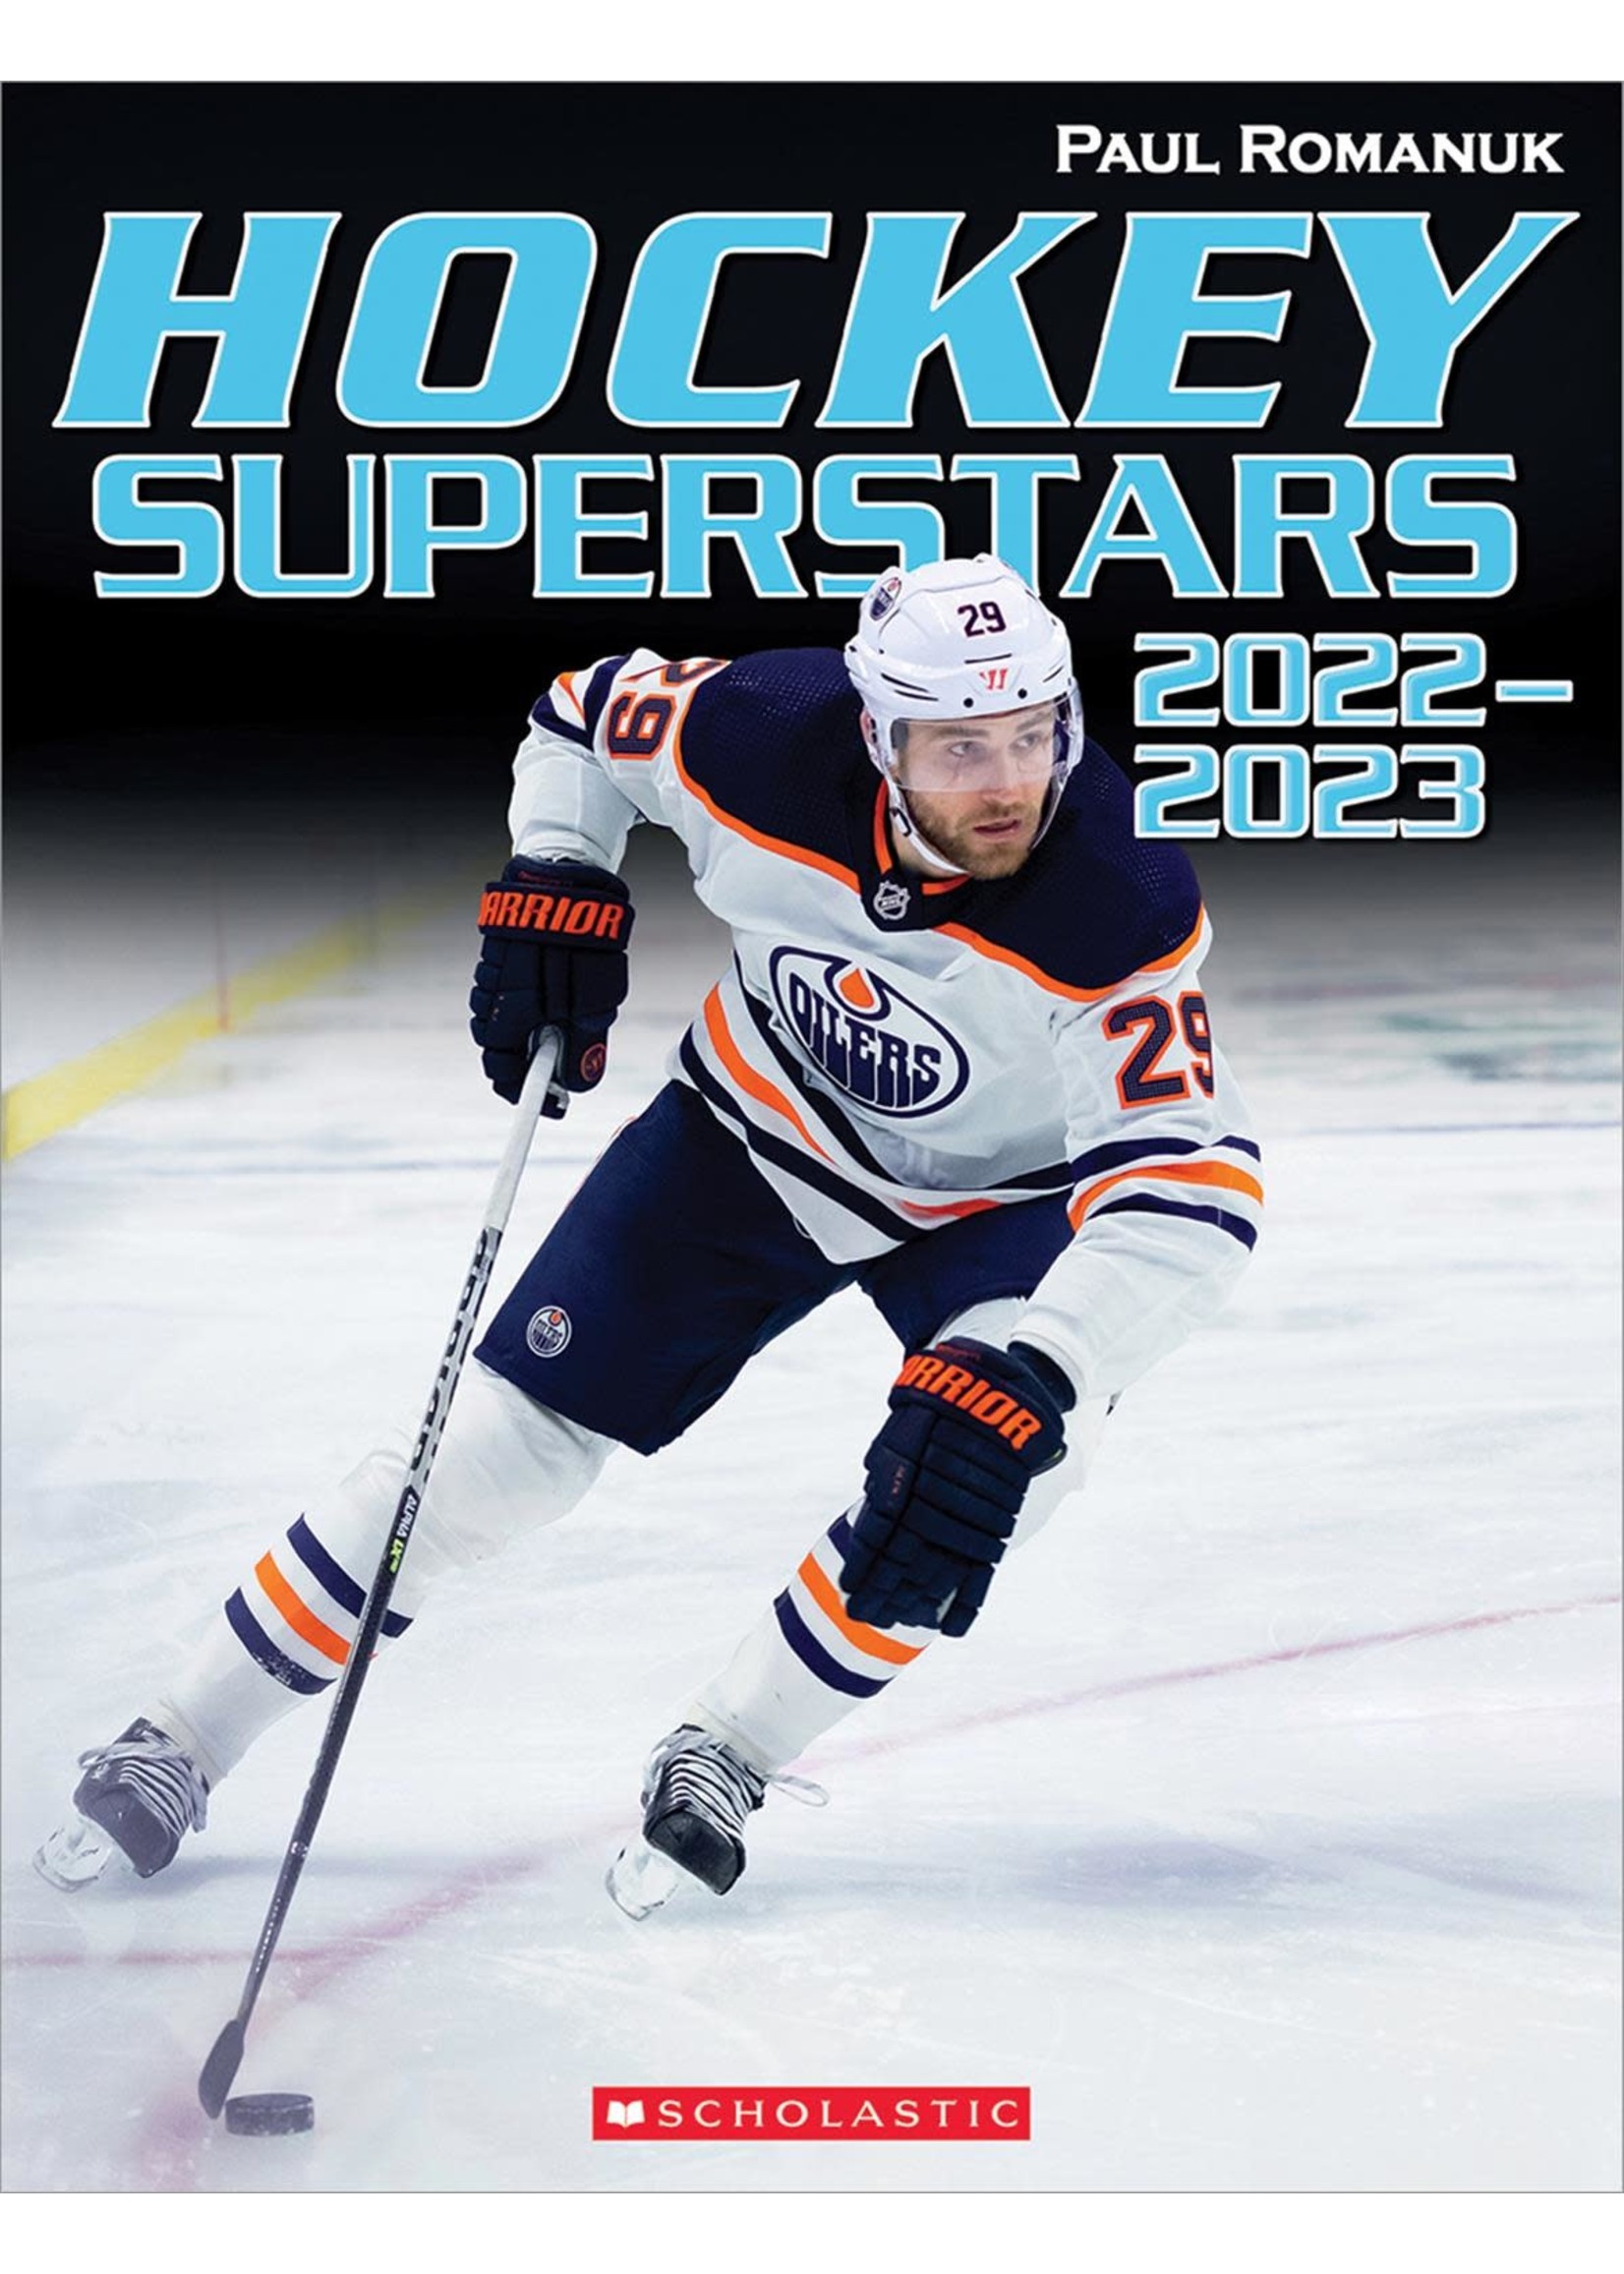 Hockey Superstars 2022-2023 by Paul Romanuk